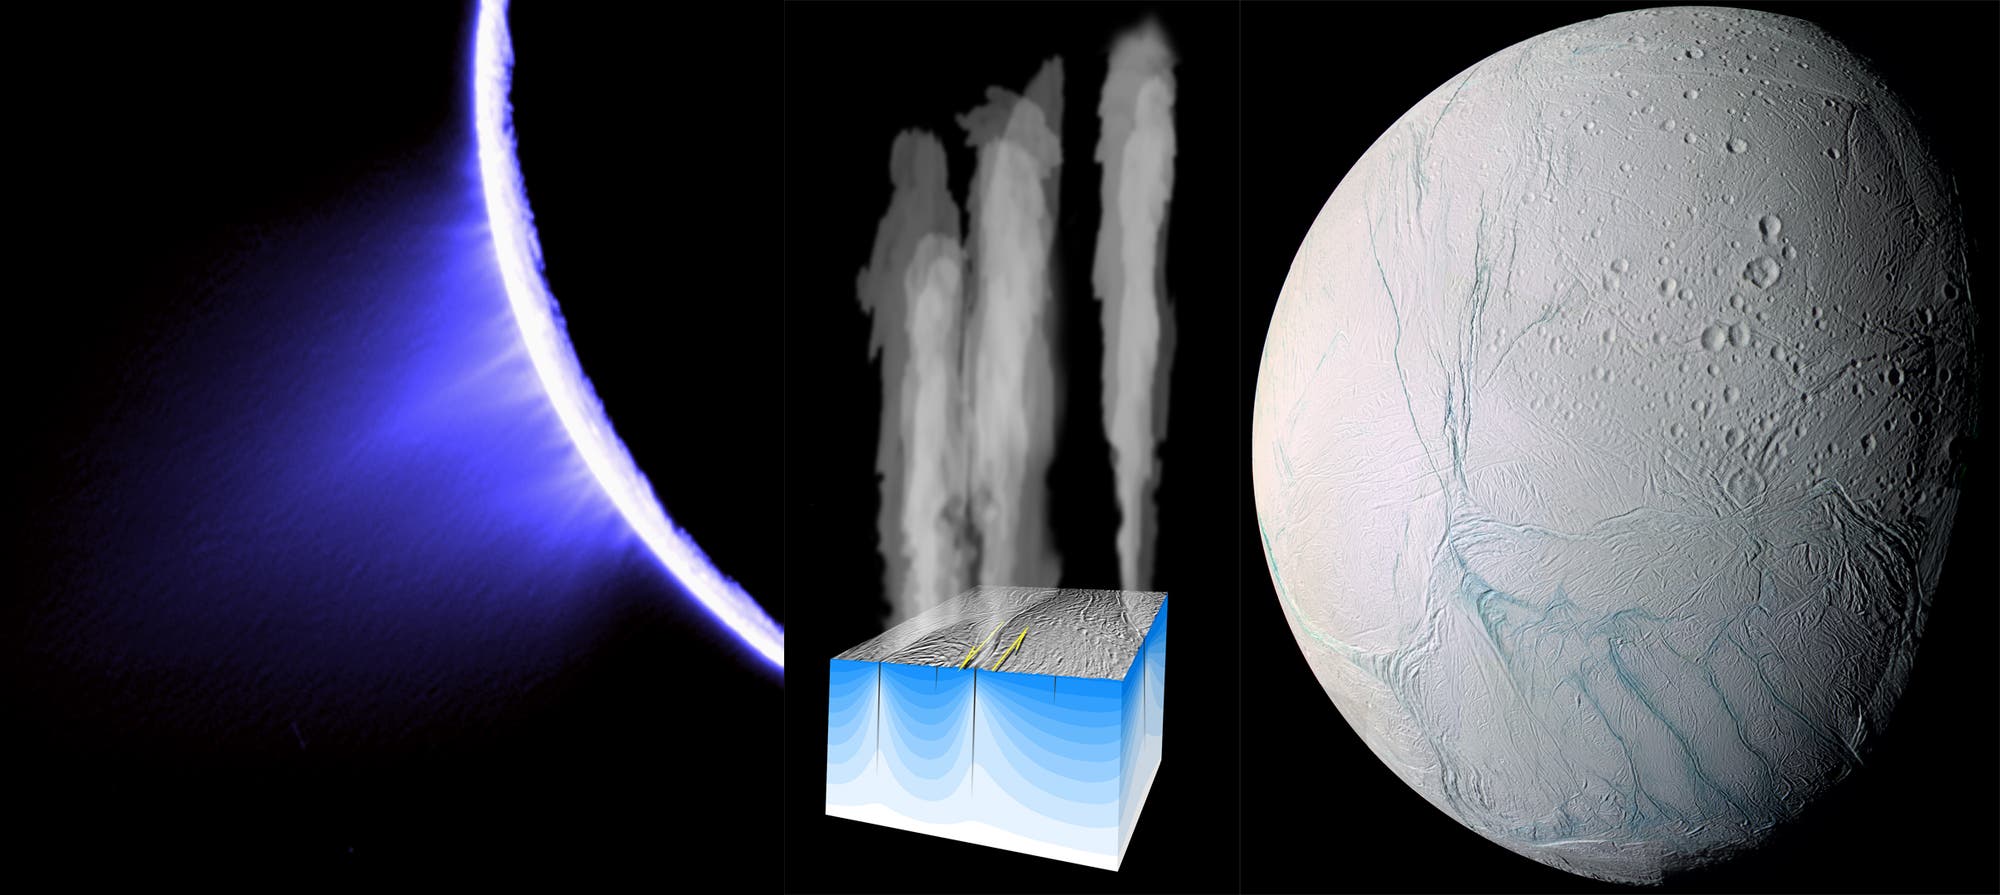 Kryovulkanismus am Südpol von Enceladus